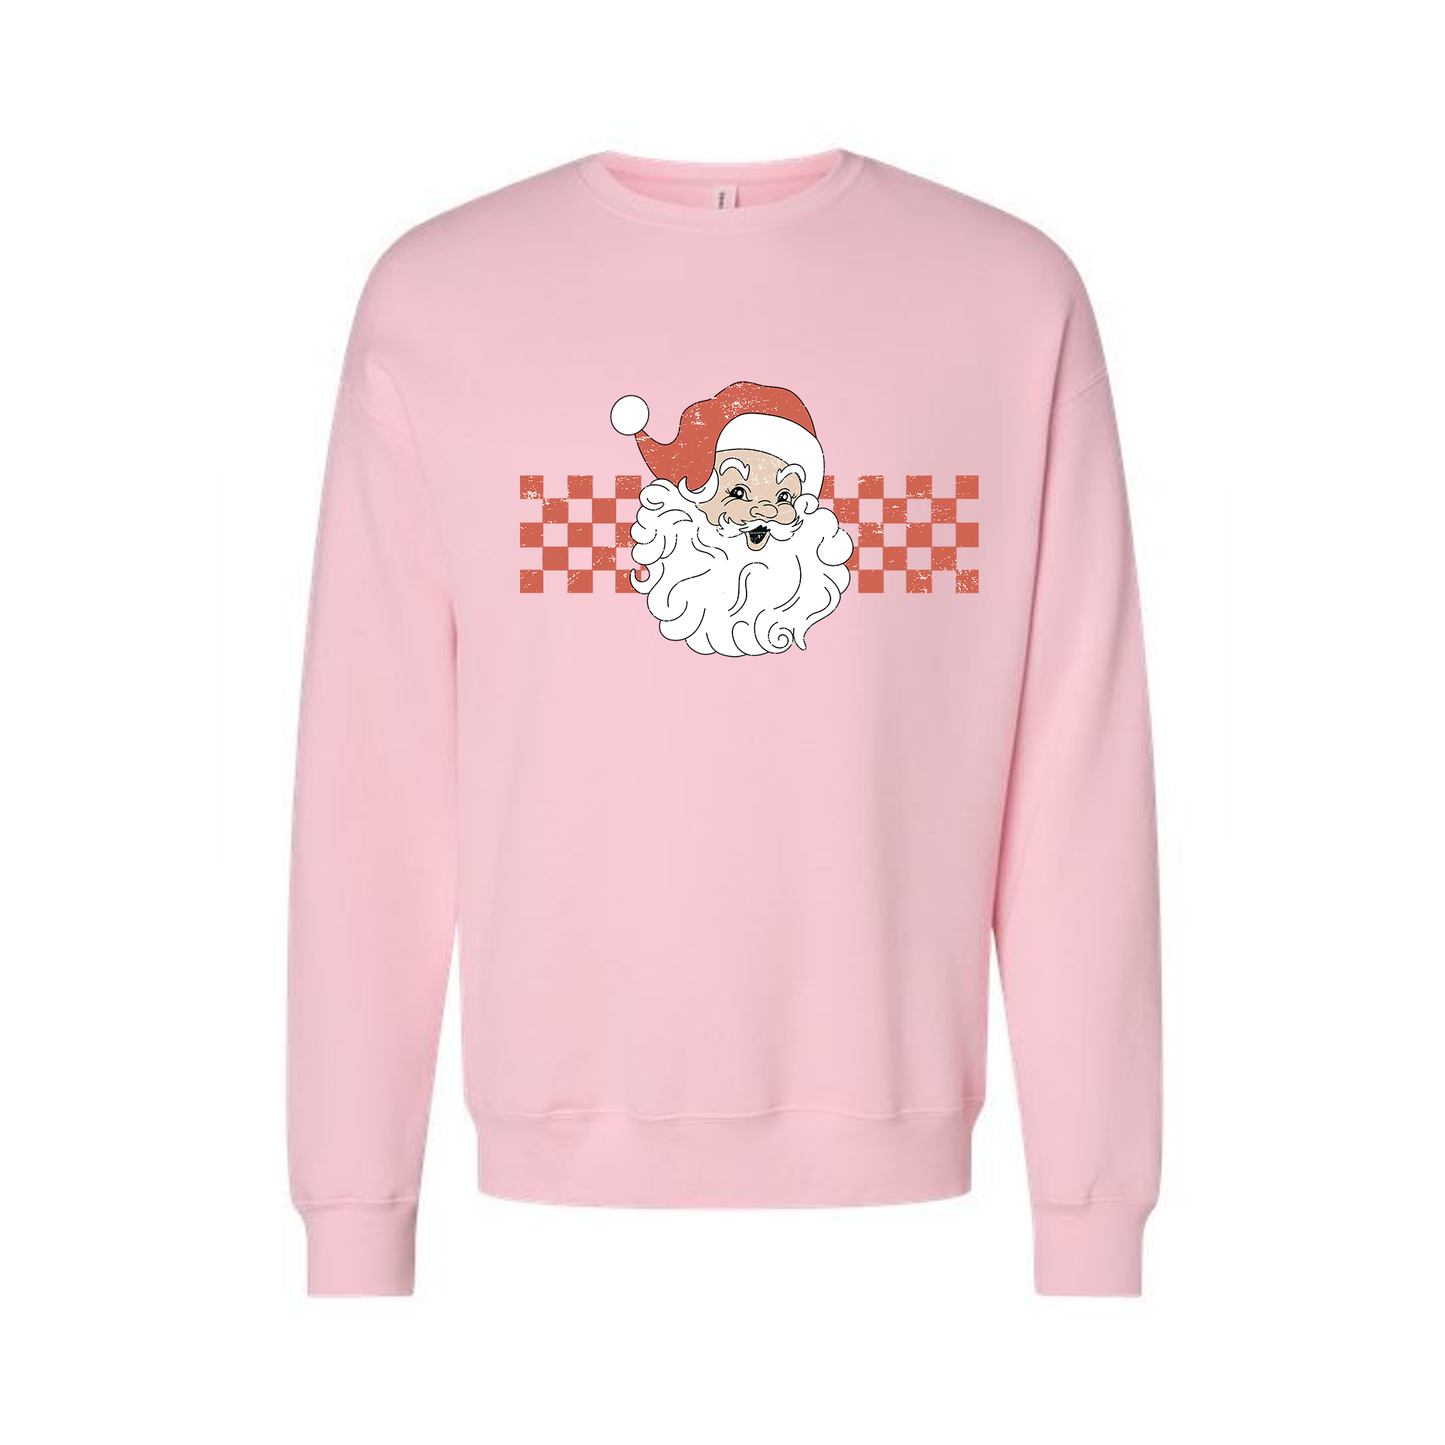 Checkered Santa Claus (Red) - Sweatshirt (Light Pink)